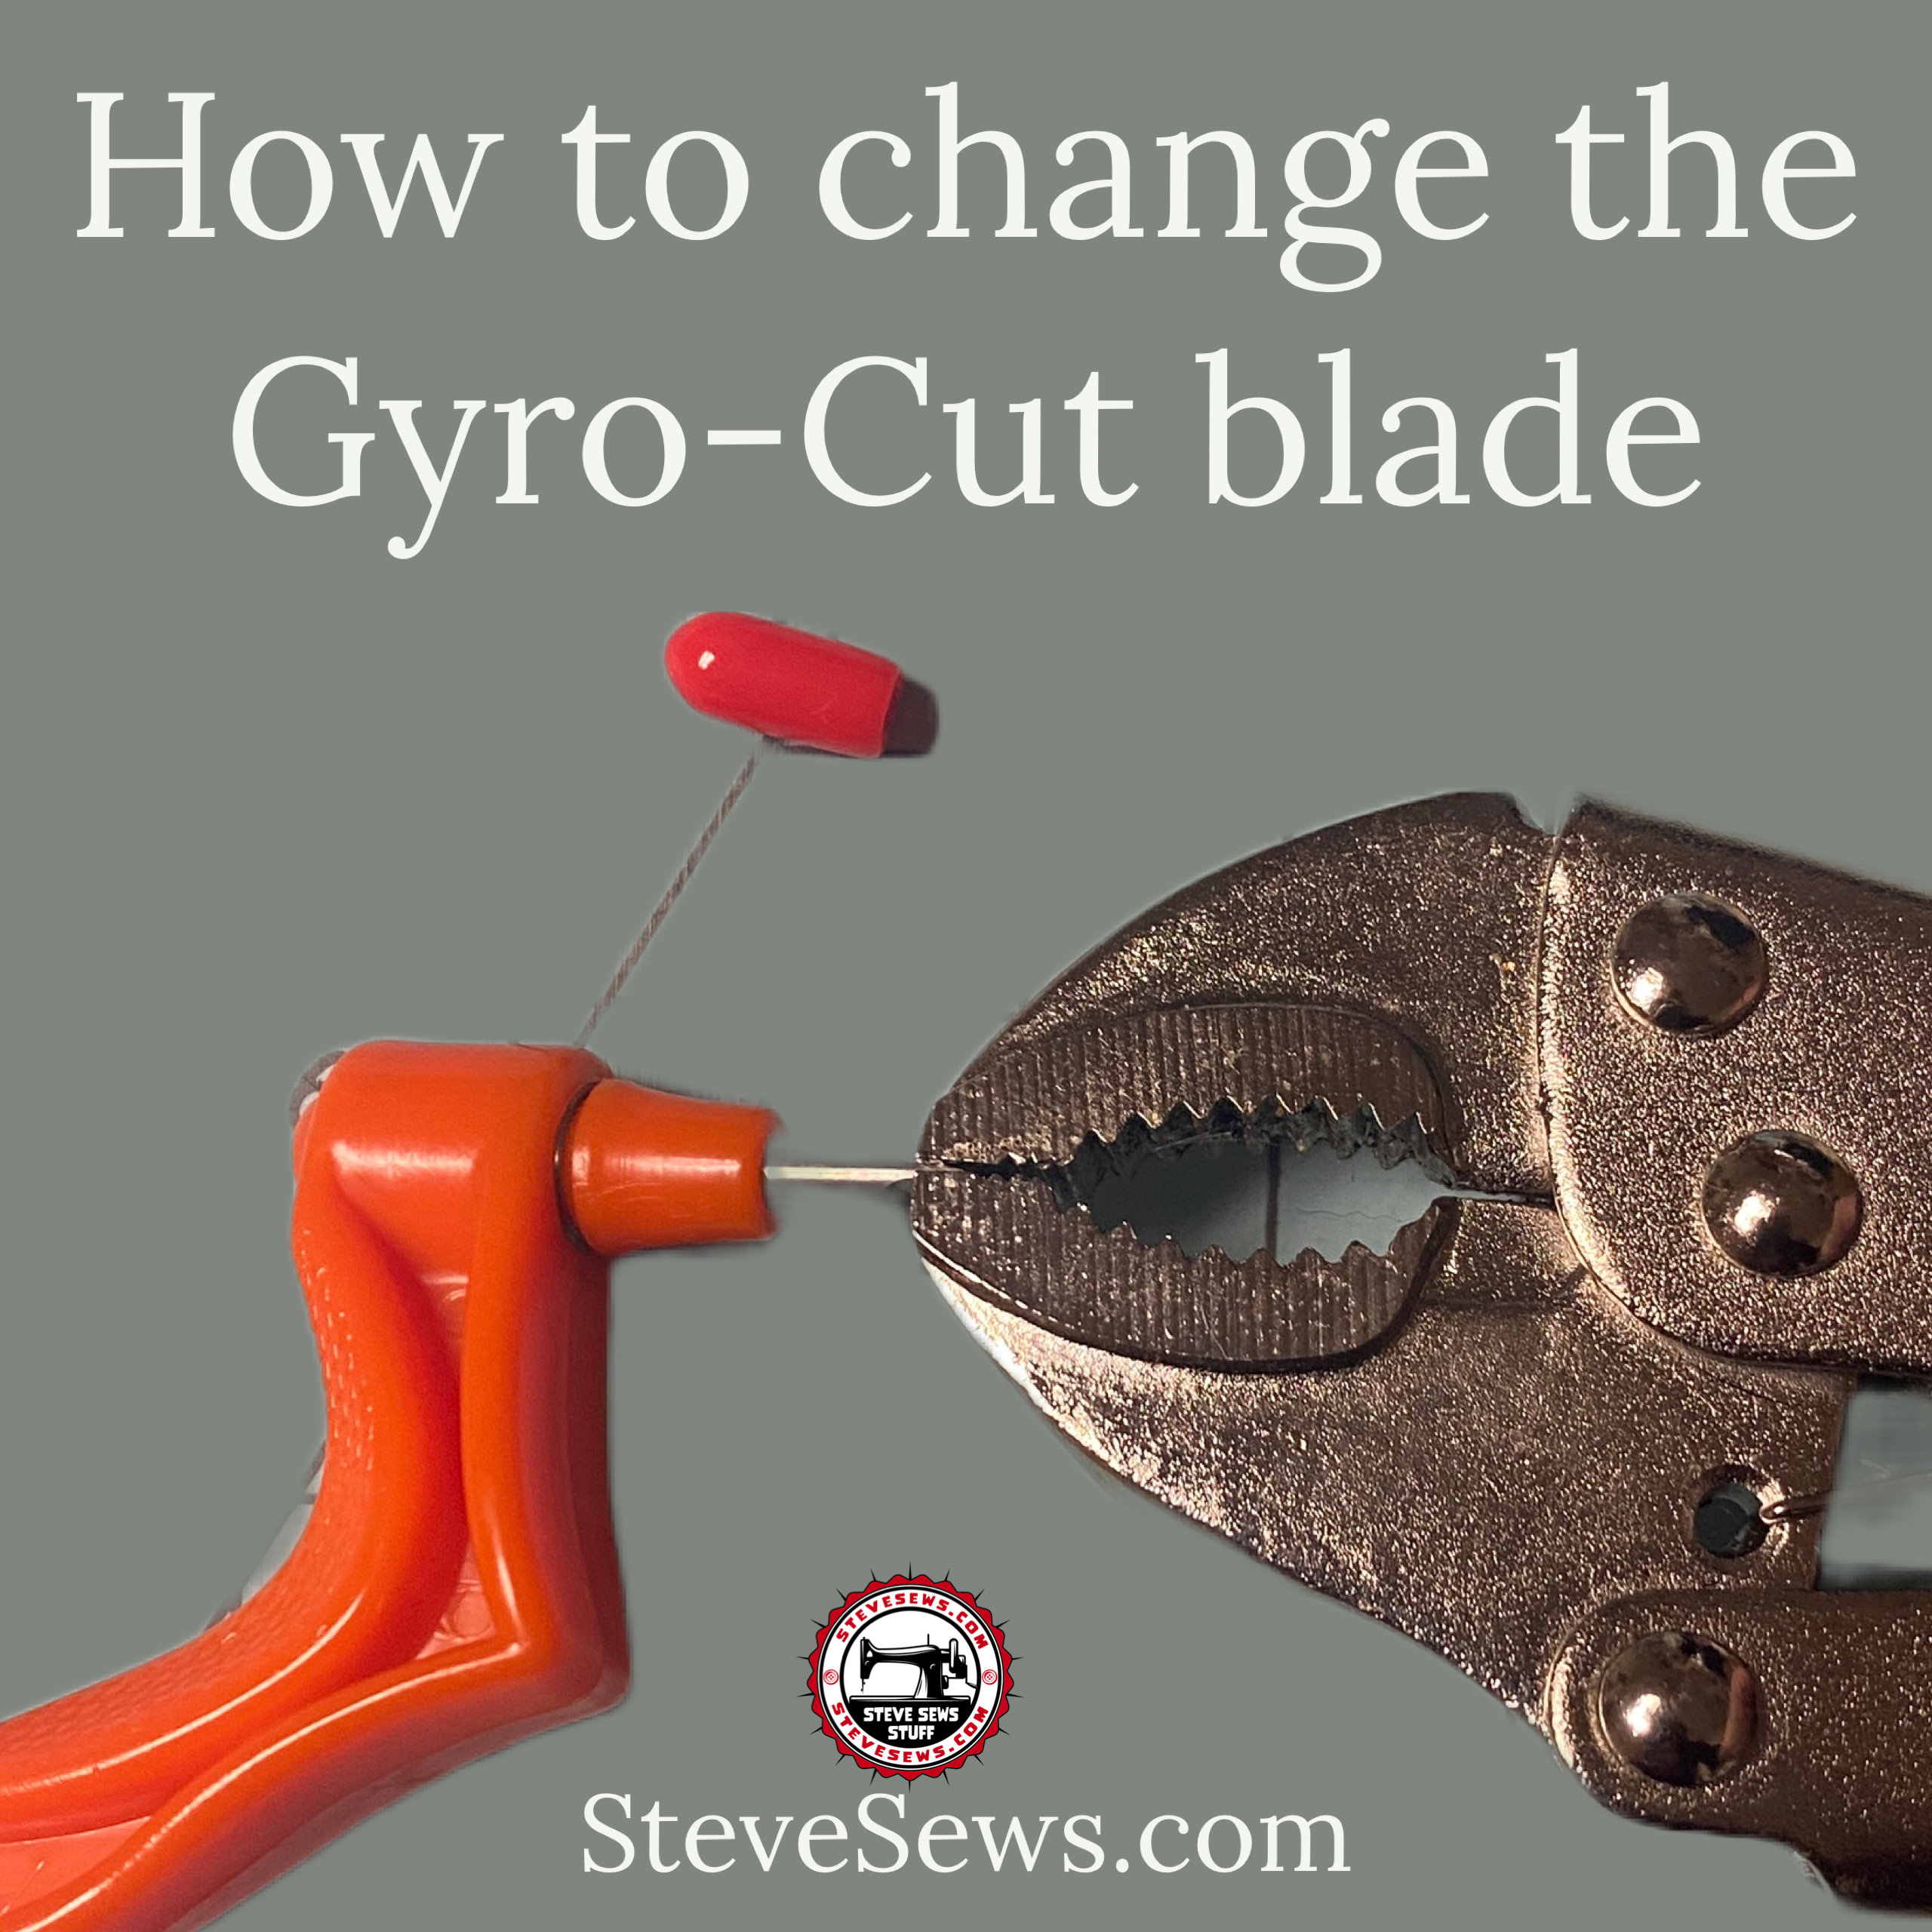 Introducing the amazing Gyro-Cut Pro!